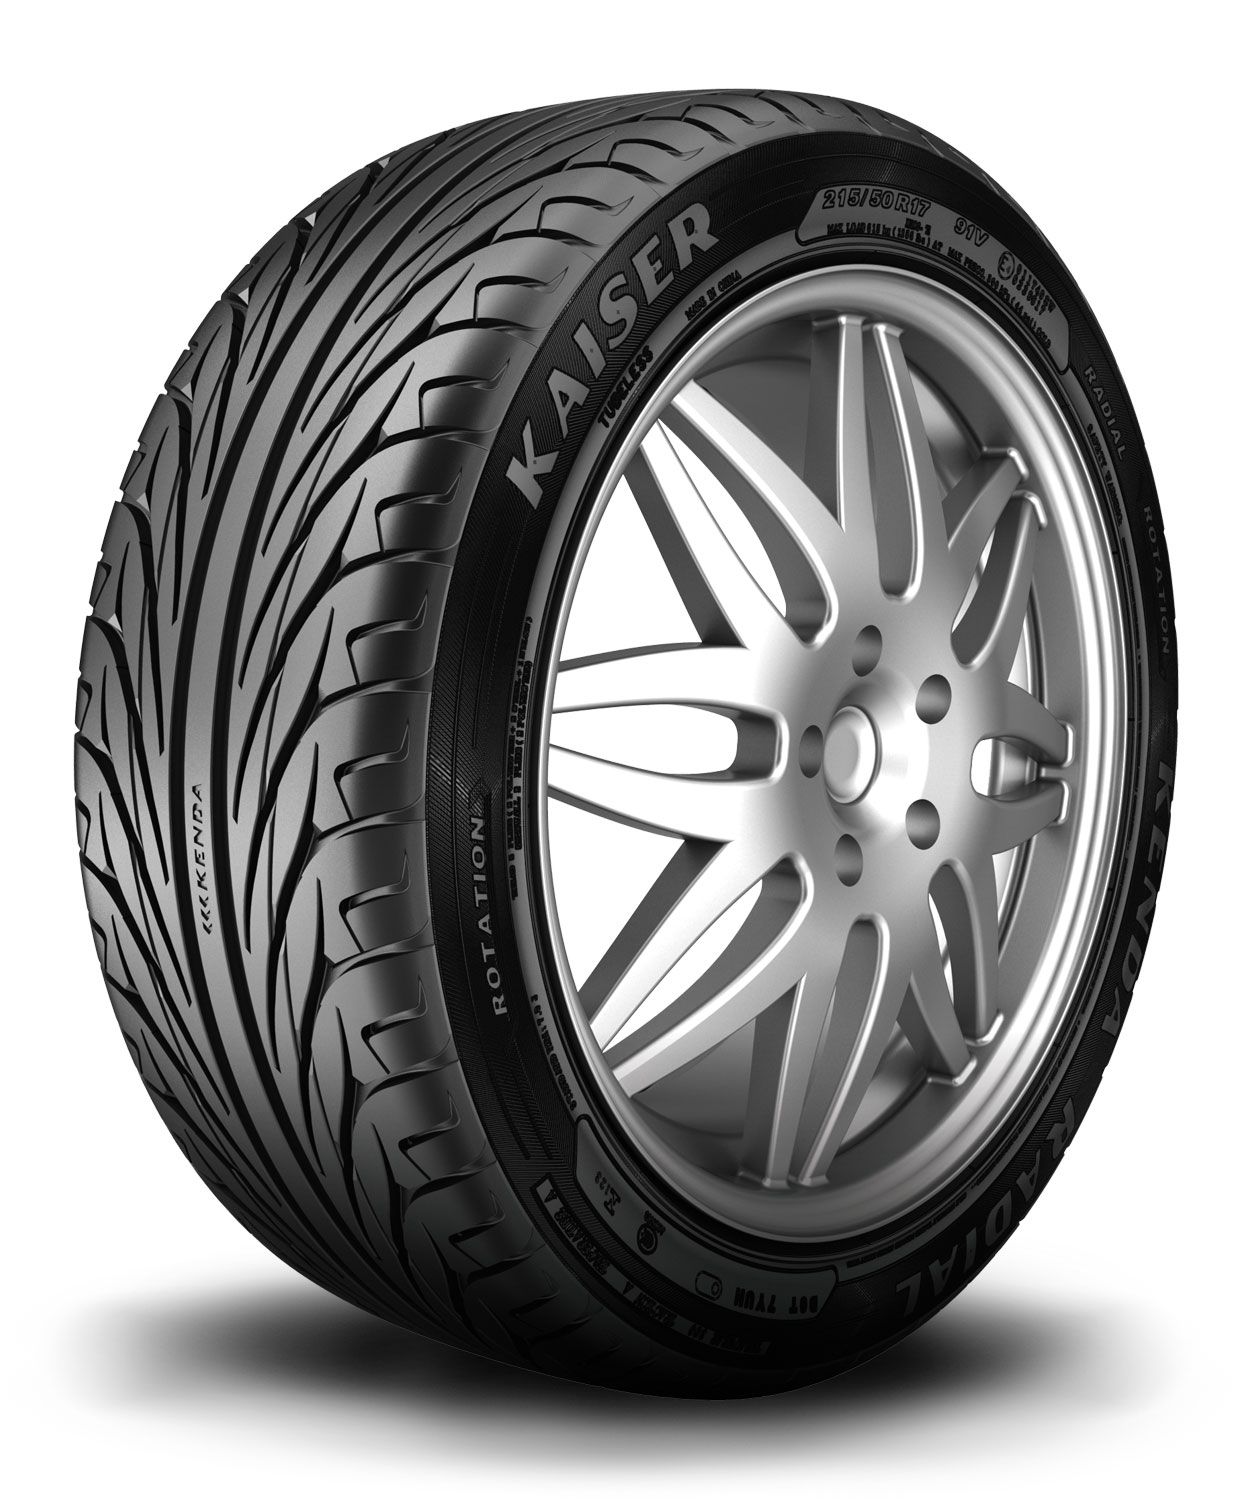 authorized-kenda-tires-dealer-brooklyn-new-york-whitey-s-tire